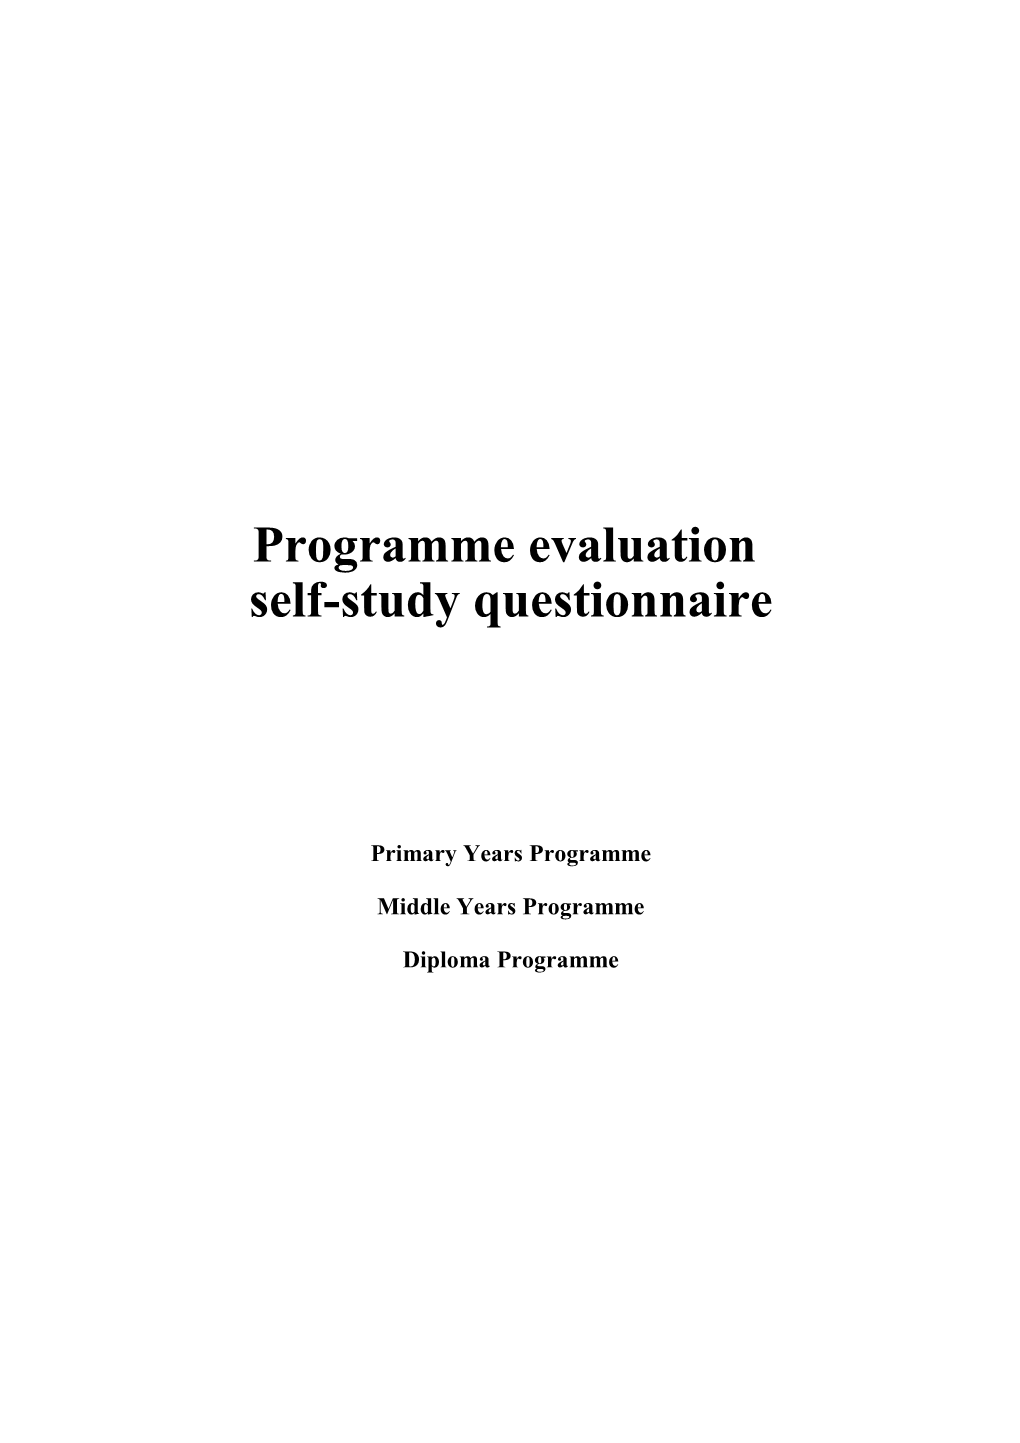 Programme Evaluation Self-Study Questionnaire